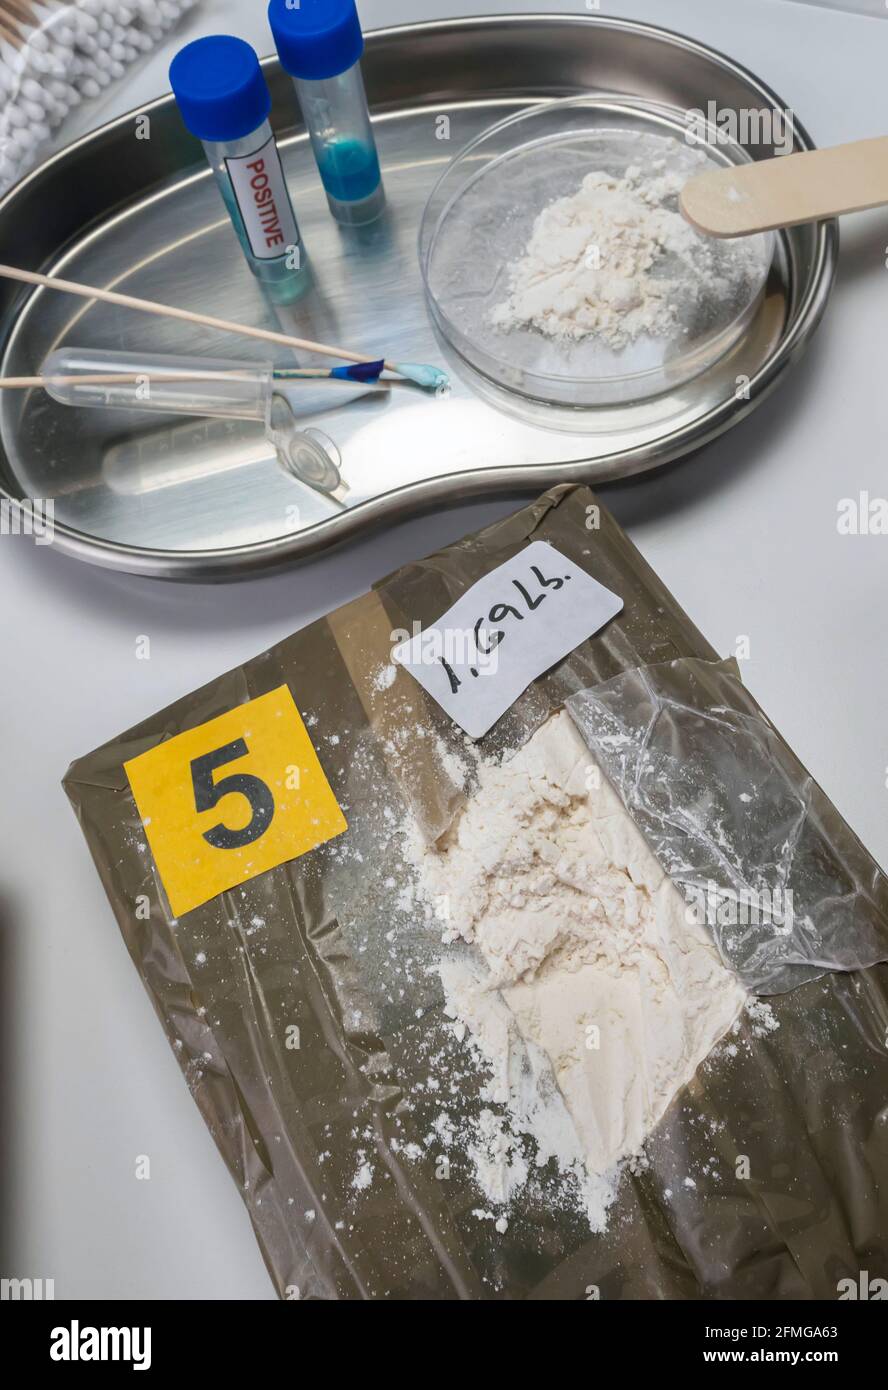 Police investigate positive for drugs in crime lab, conceptual image Stock Photo